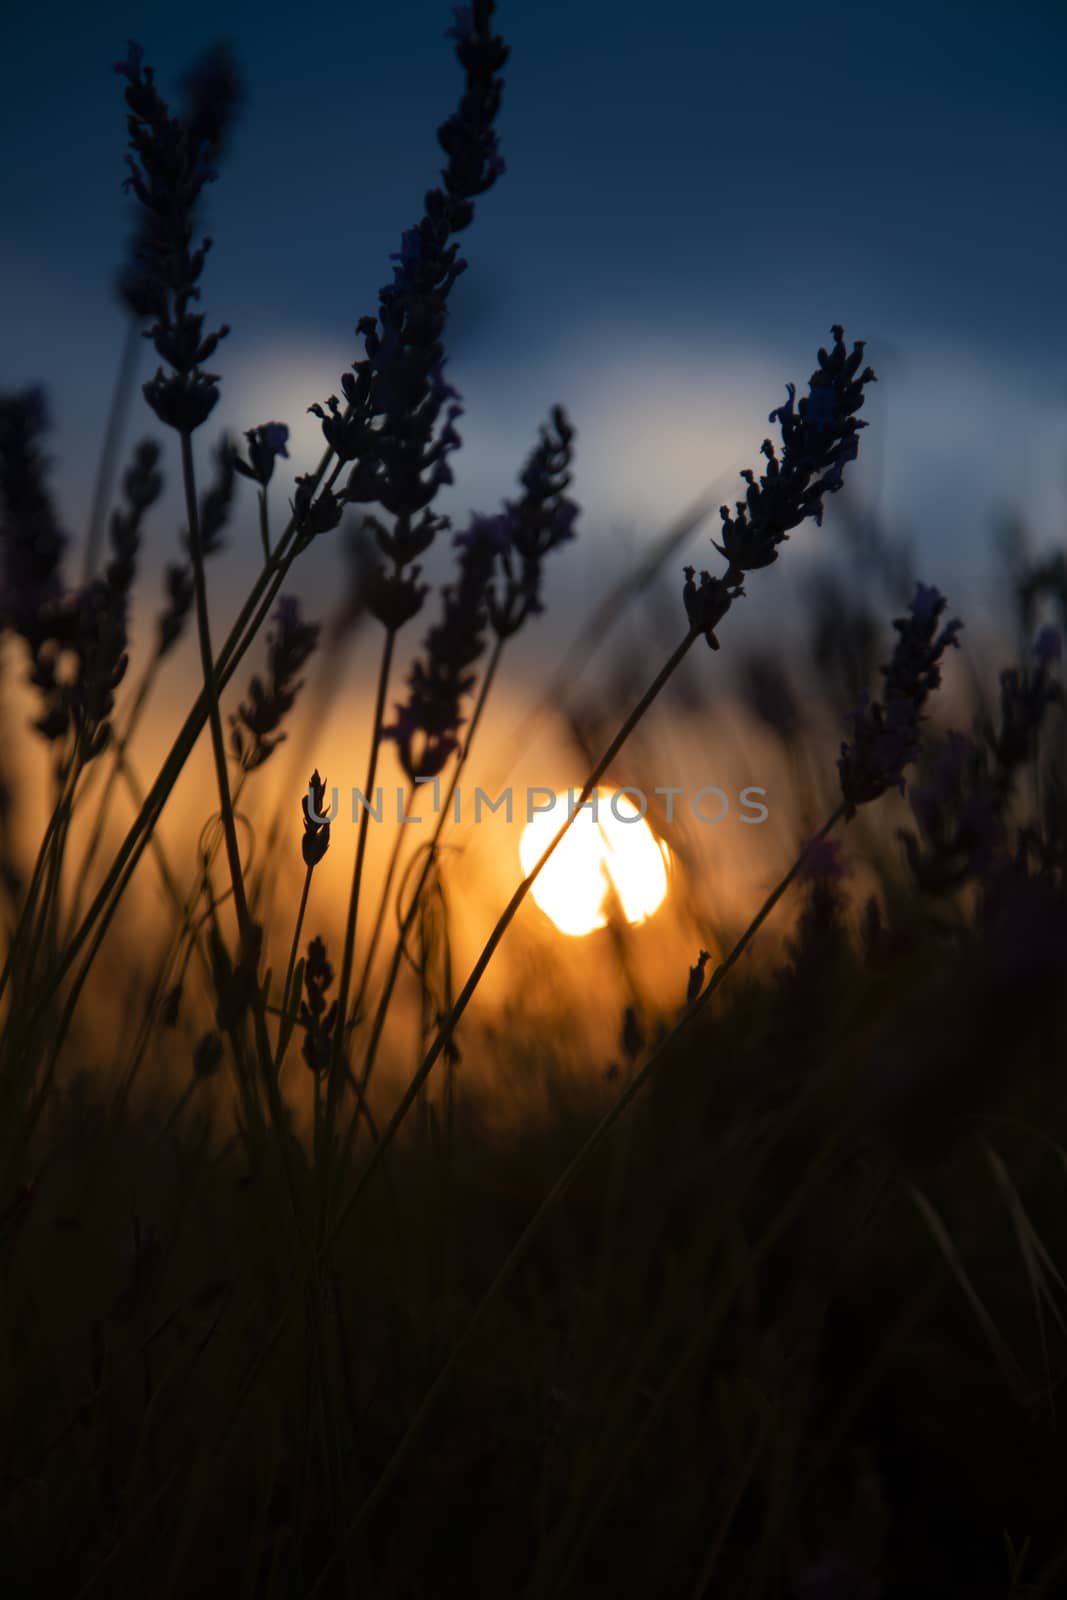 Silhouette in a lavender field in sunset by Nemida